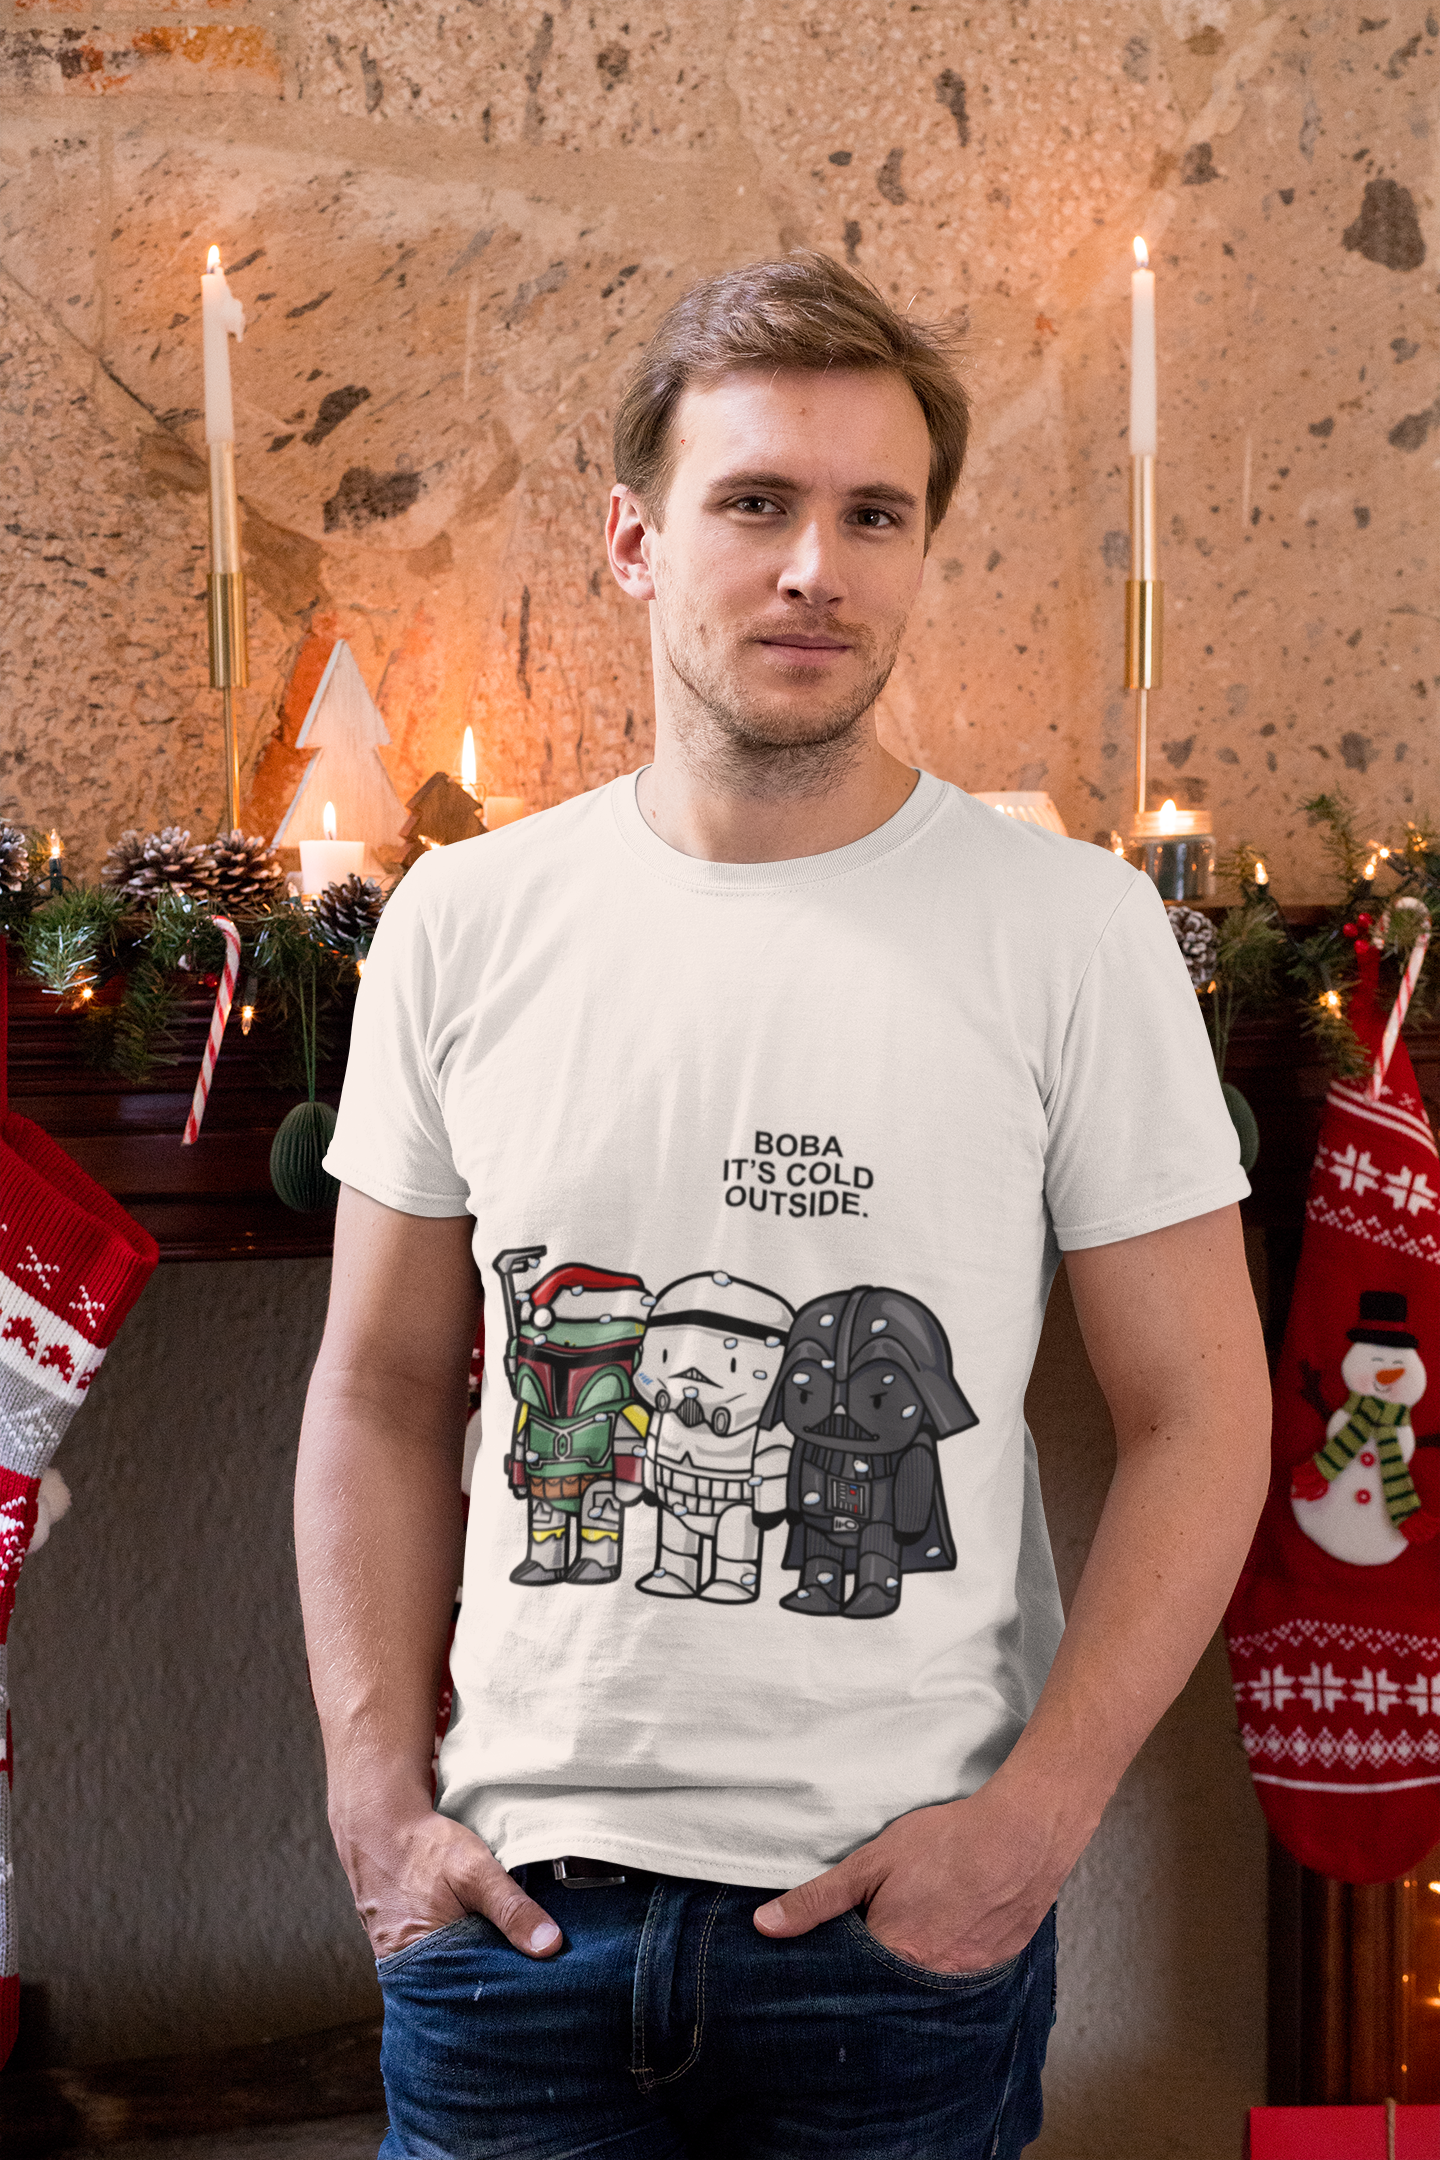 Boba Fett Stormtrooper Darth Vader boba it’s cold outside christmas shirt, hoodie, tank top – pdn